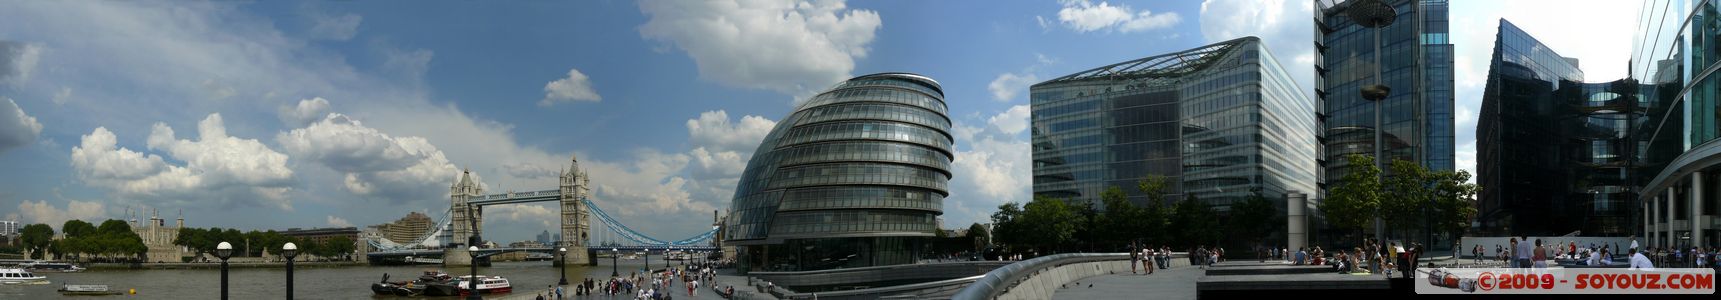 London - Southwark - City Hall (The Egg) and More London - panorama
Mots-clés: More London City Hall (The Egg) panorama